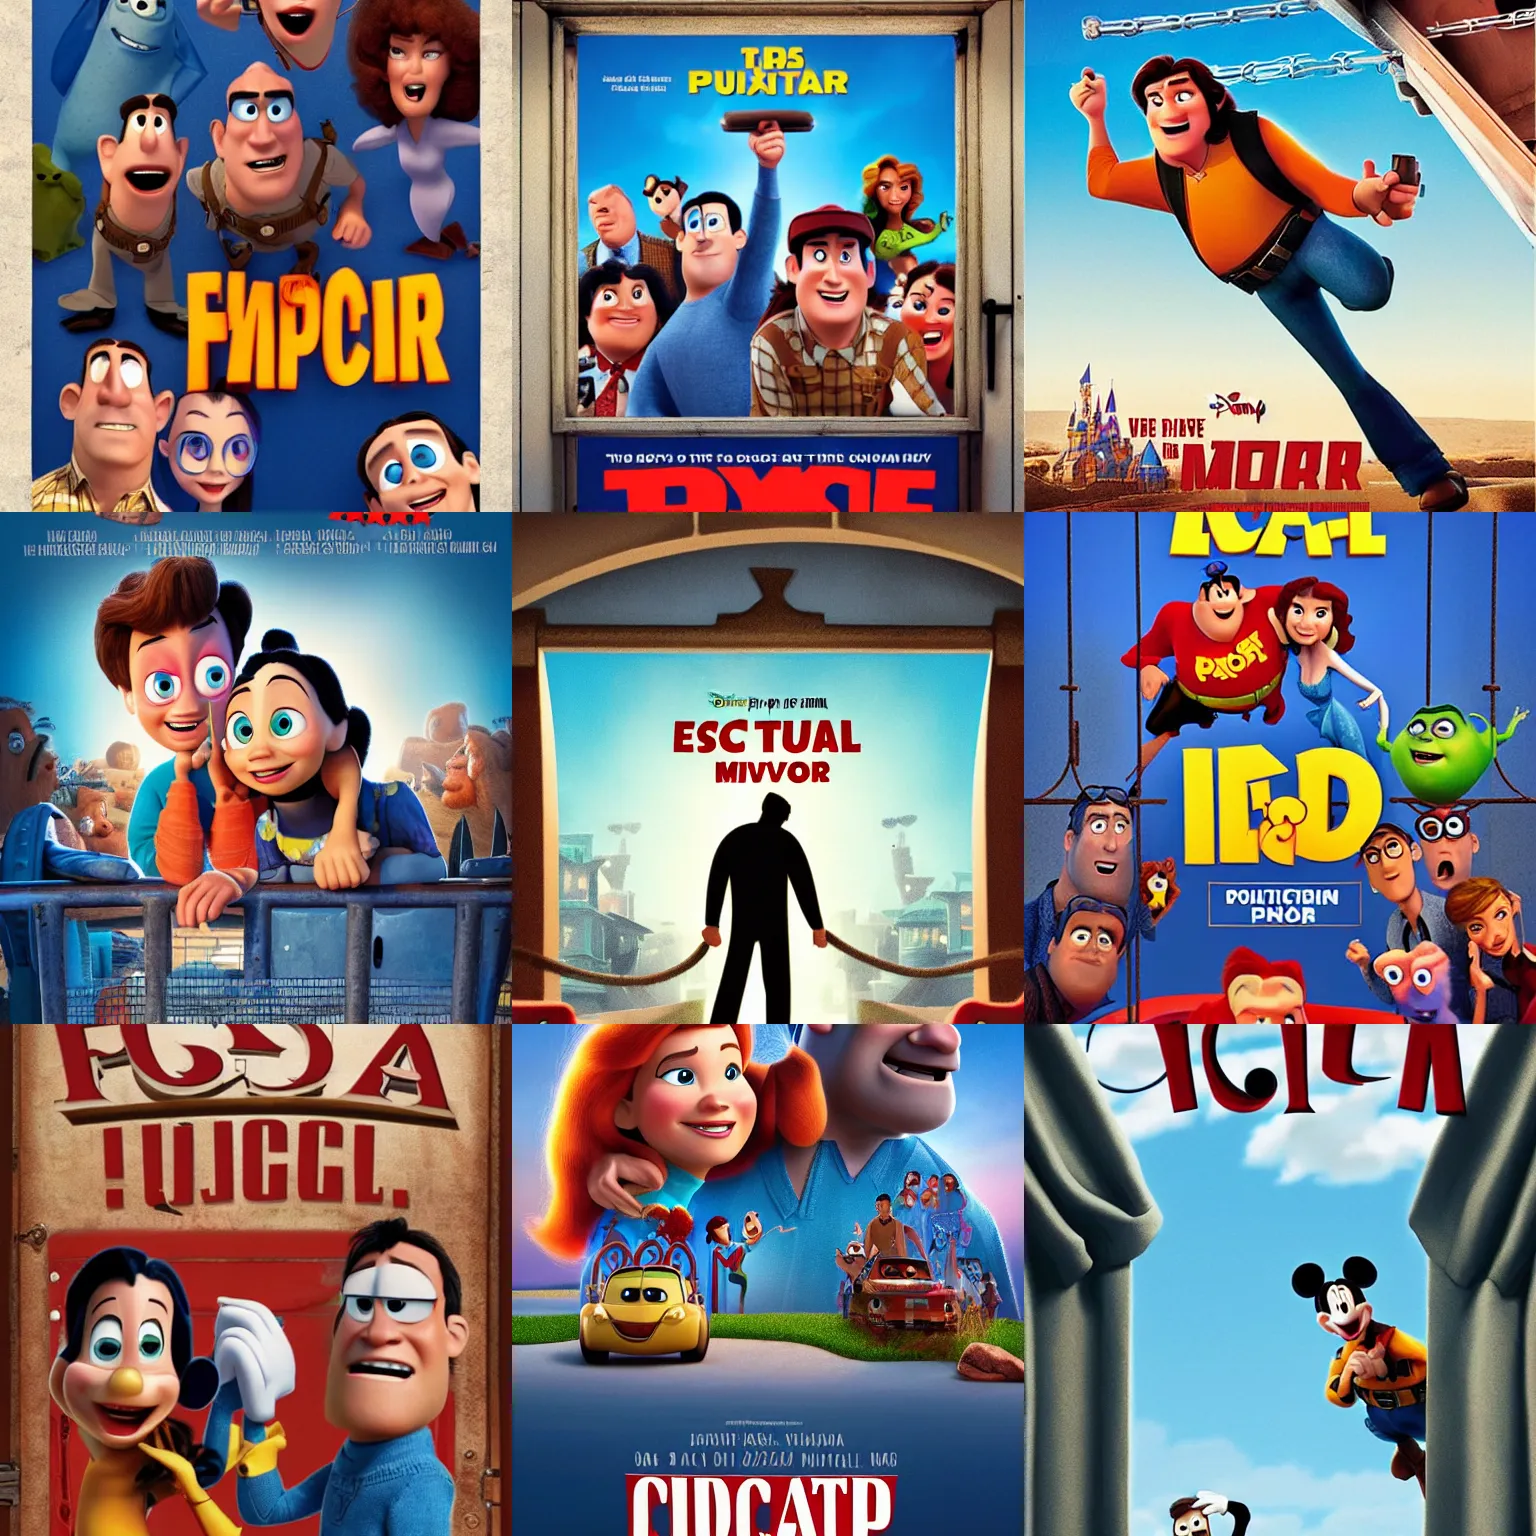 Prompt: disney pixar presents movie poster about escape from political prison